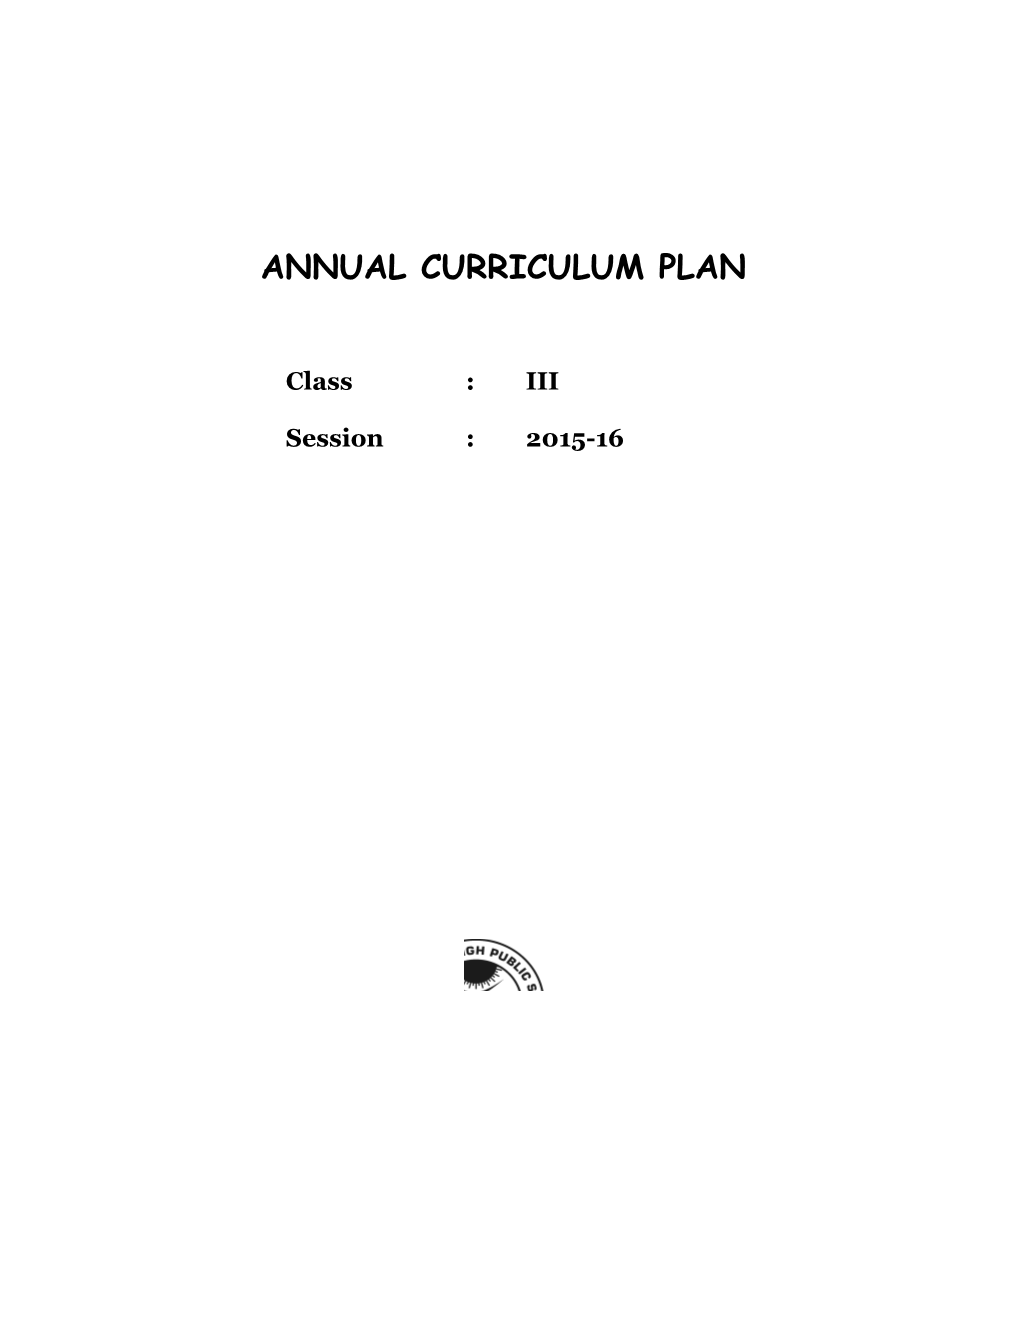 Annual Curriculum Plan